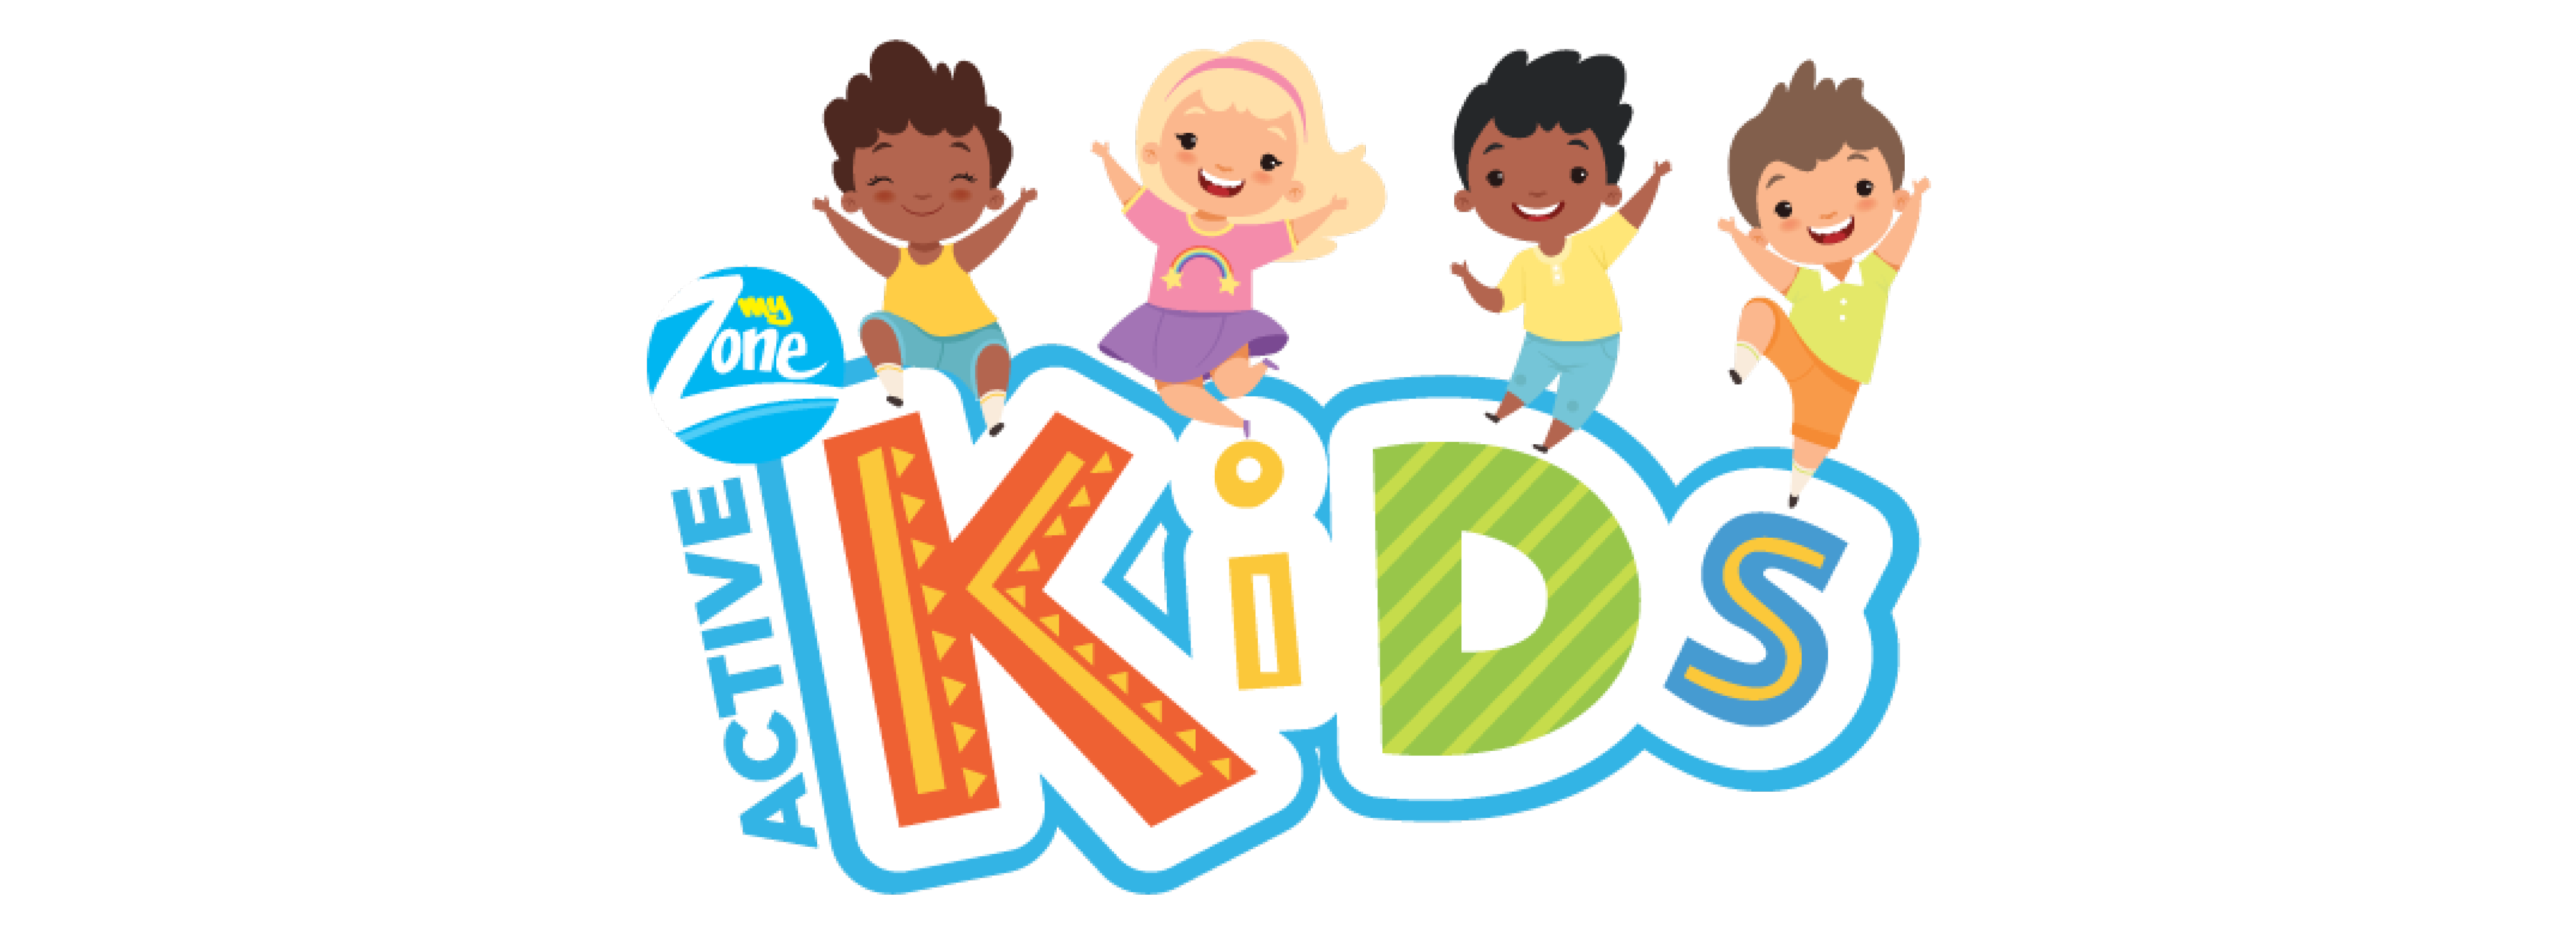 Active Kids Episode 253 - 30 July 2021